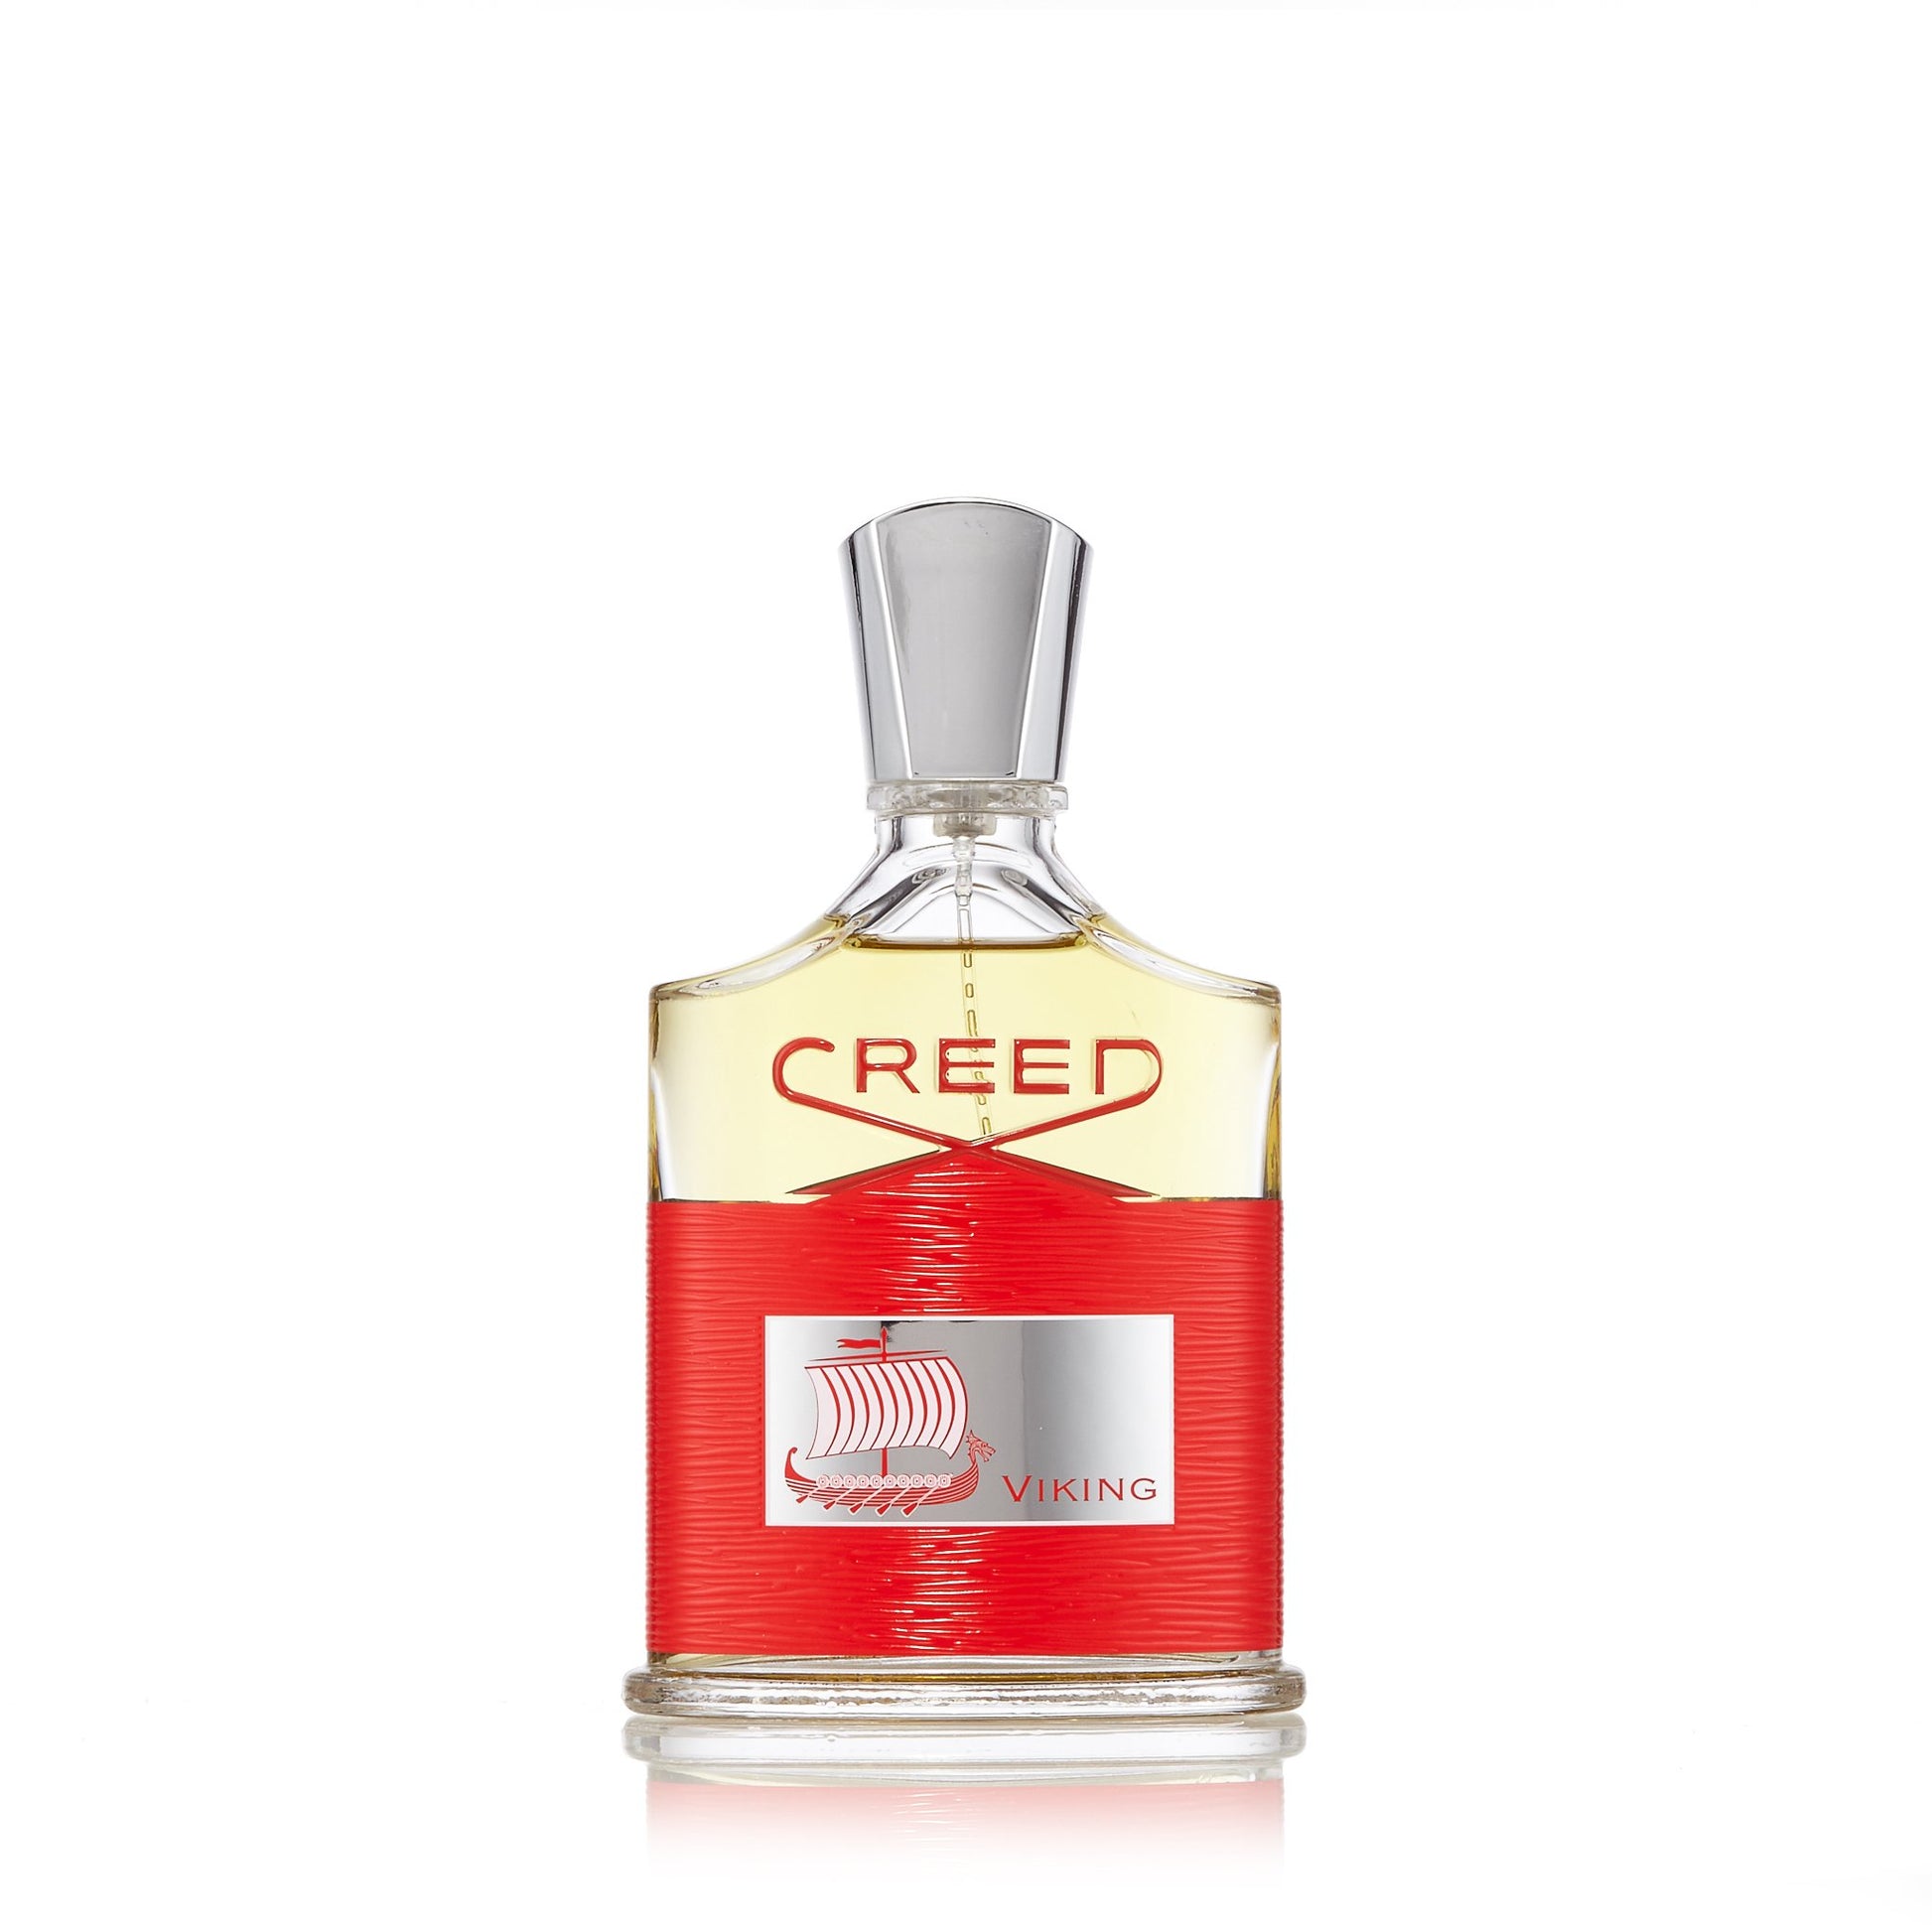 Viking Eau de Parfum Spray for Men by Creed 3.3 oz. Click to open in modal